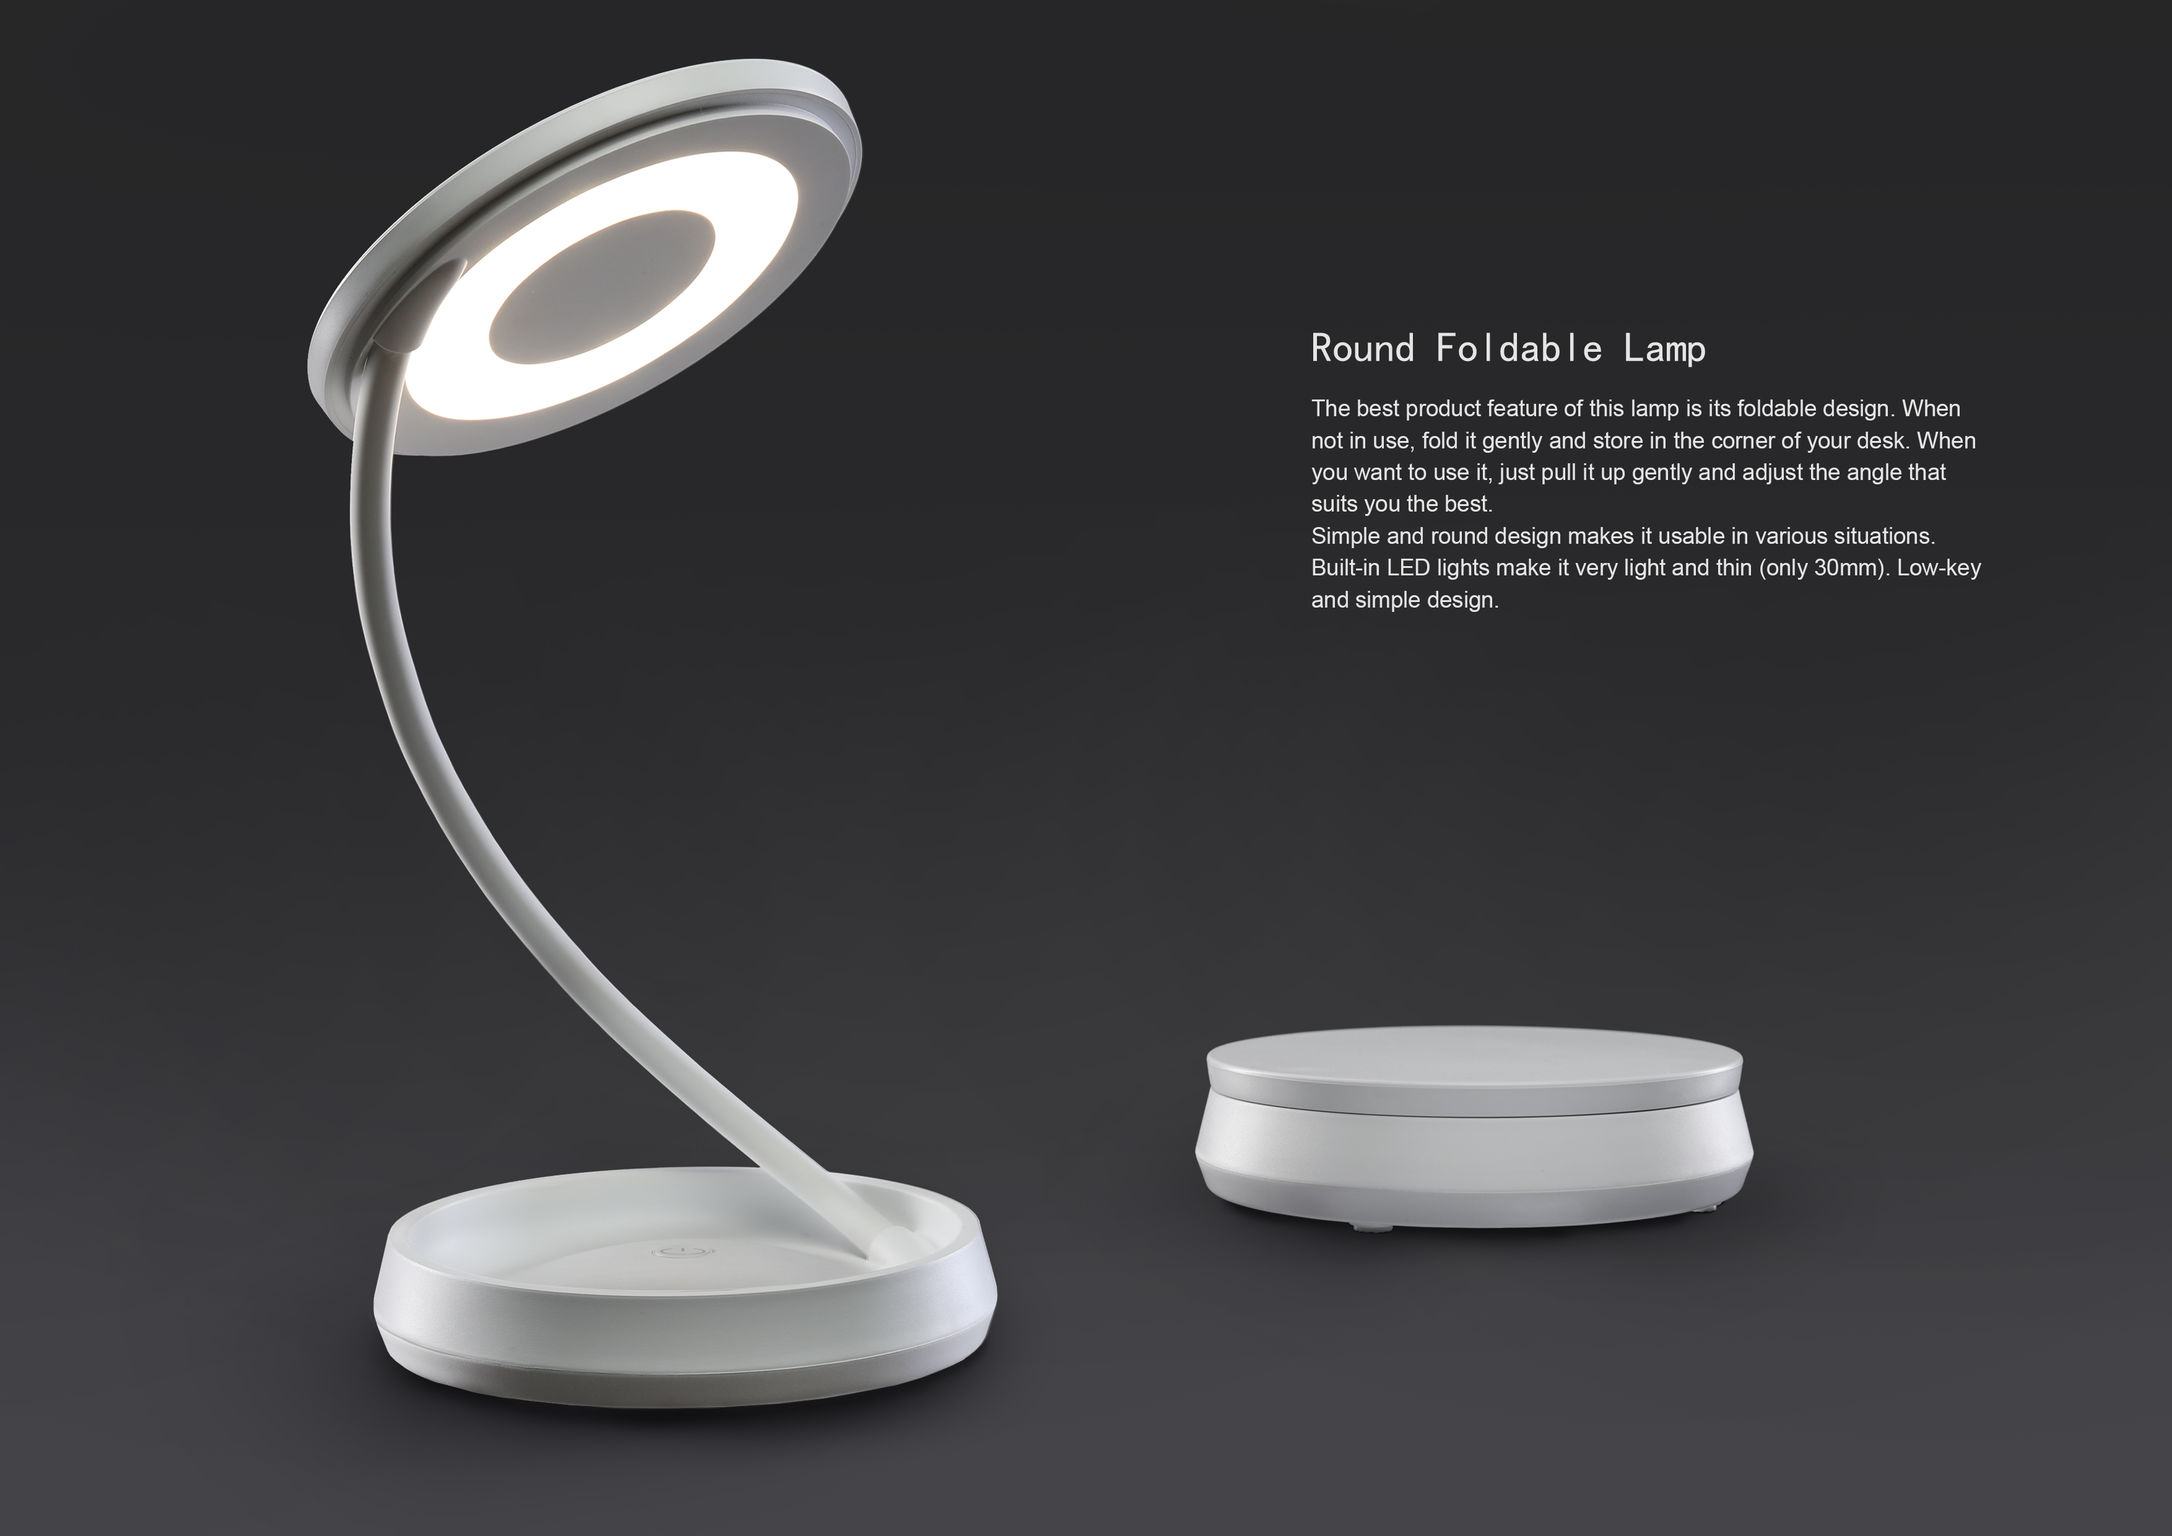 iF Design - Round Foldable Lamp